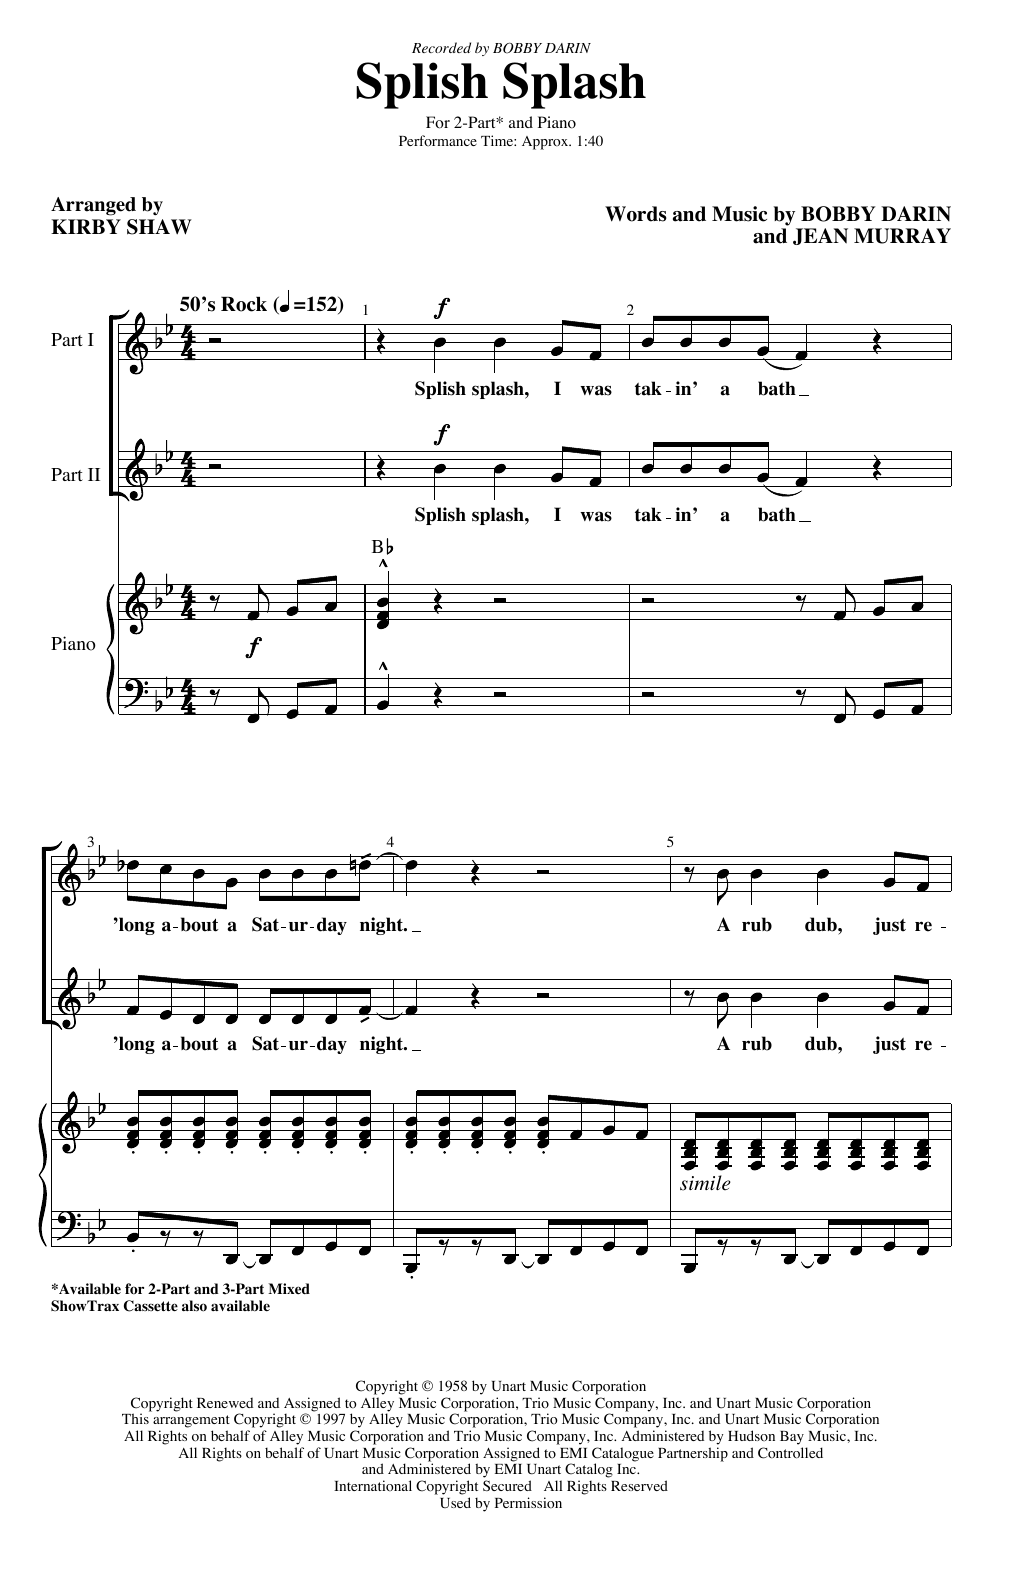 Bobby Darin Splish Splash (arr. Kirby Shaw) Sheet Music Notes & Chords for 2-Part Choir - Download or Print PDF